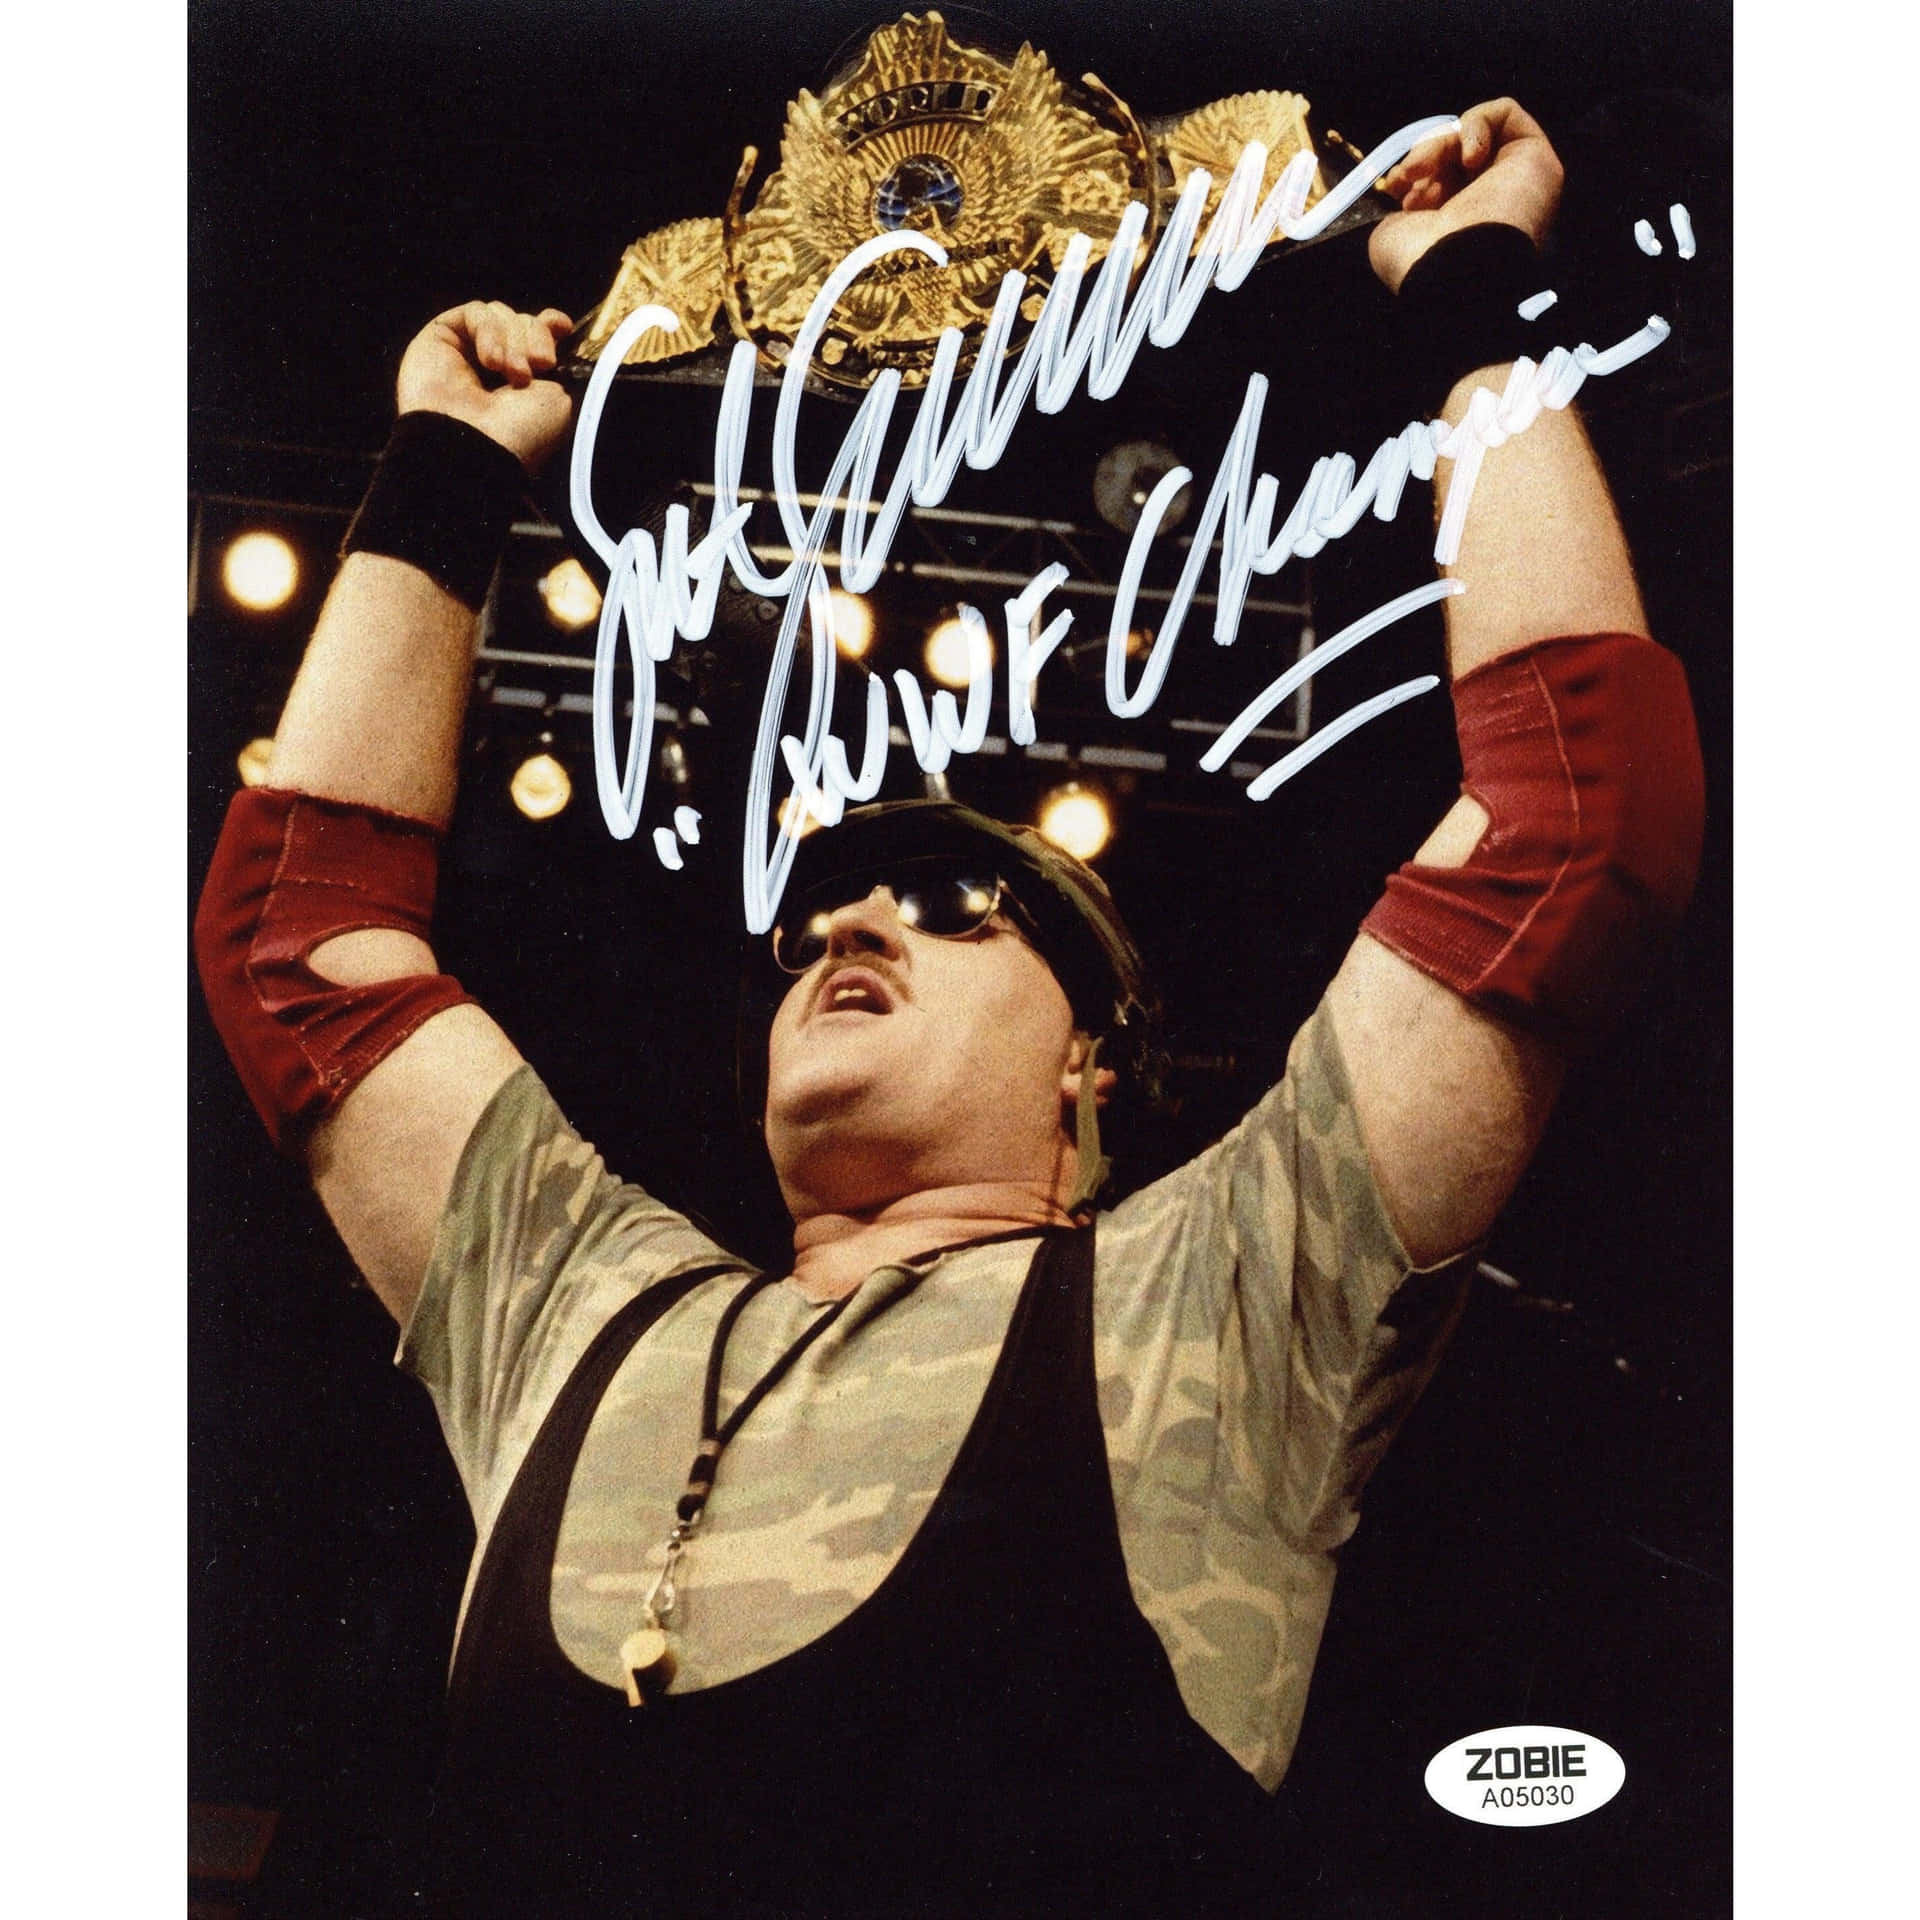 Sgt Slaughter Signed Wwf Wrestling Poster Picture